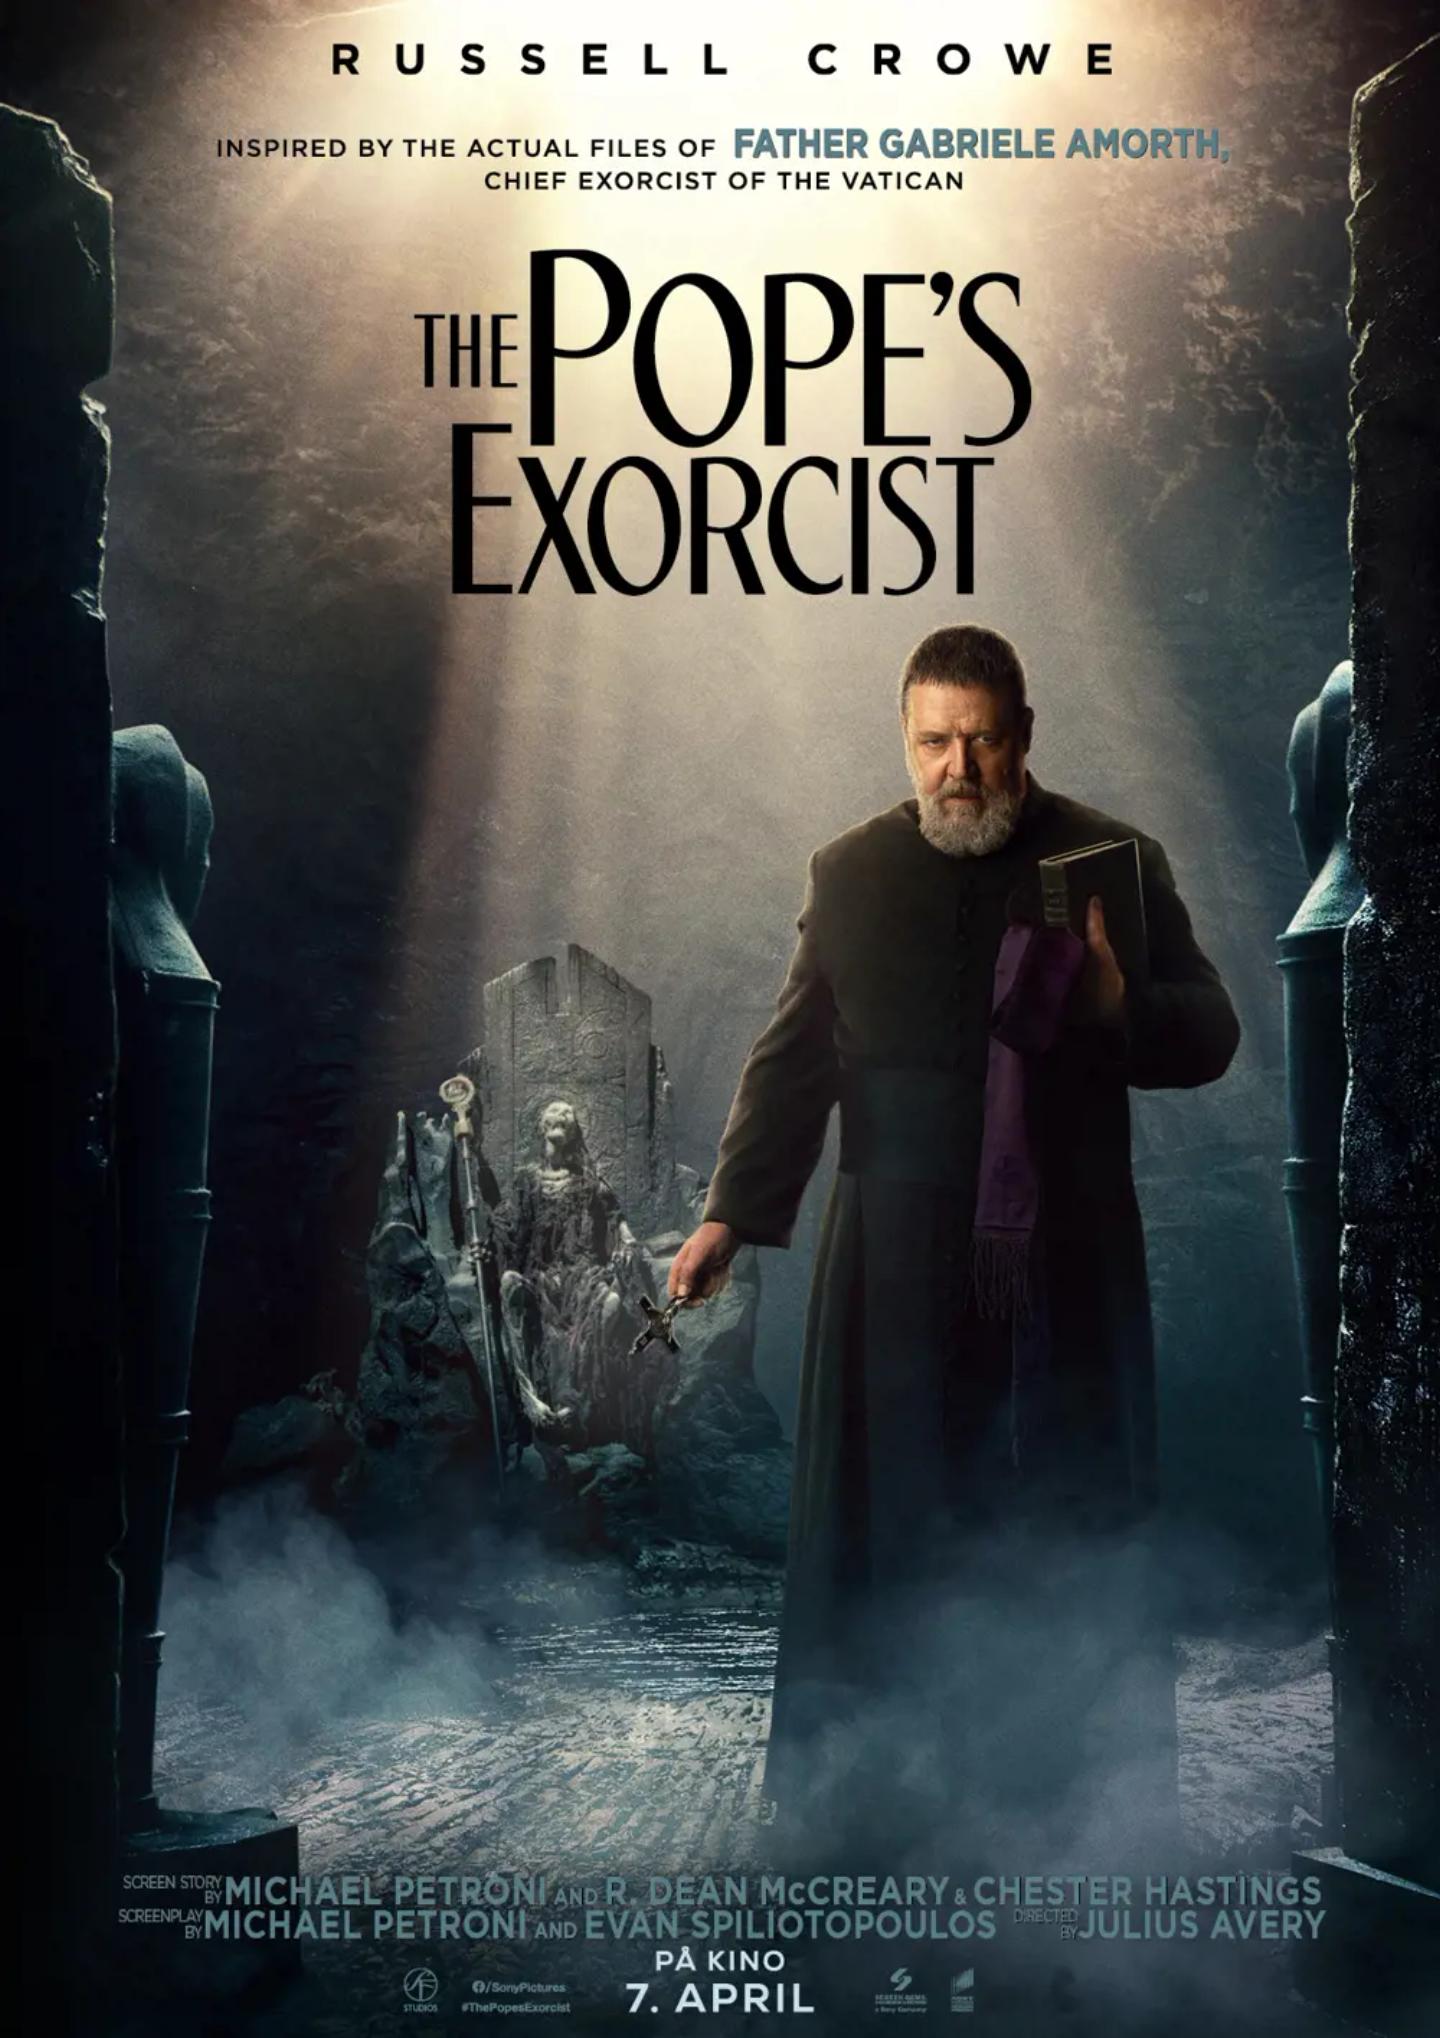 Plakat for 'The Pope's Exorcist'